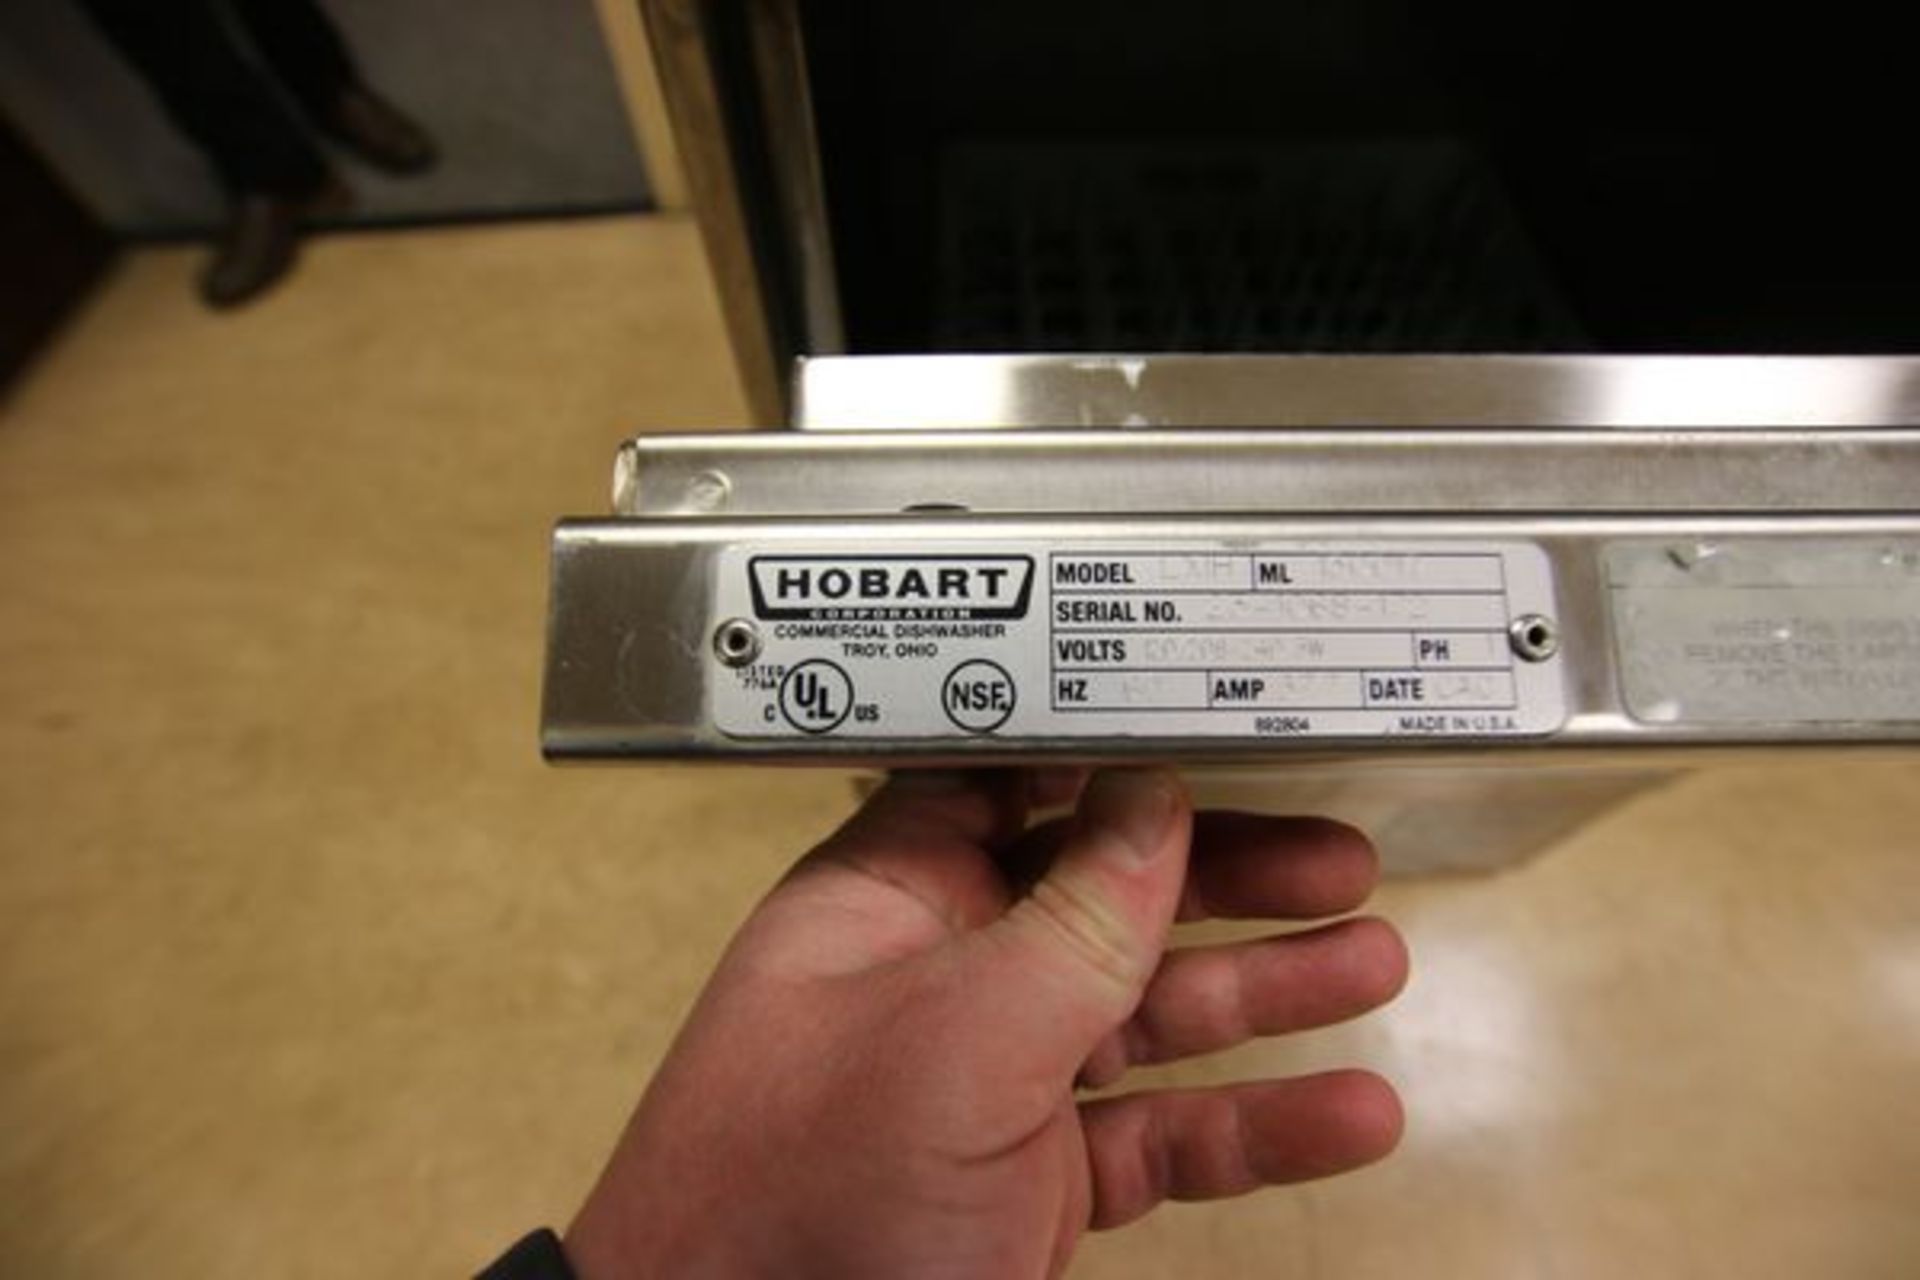 Hobart S/S Dishwasher, Model LXIH, S/N 23-1068-172, Single Phase, 120/208-240 3W V, - Image 4 of 4